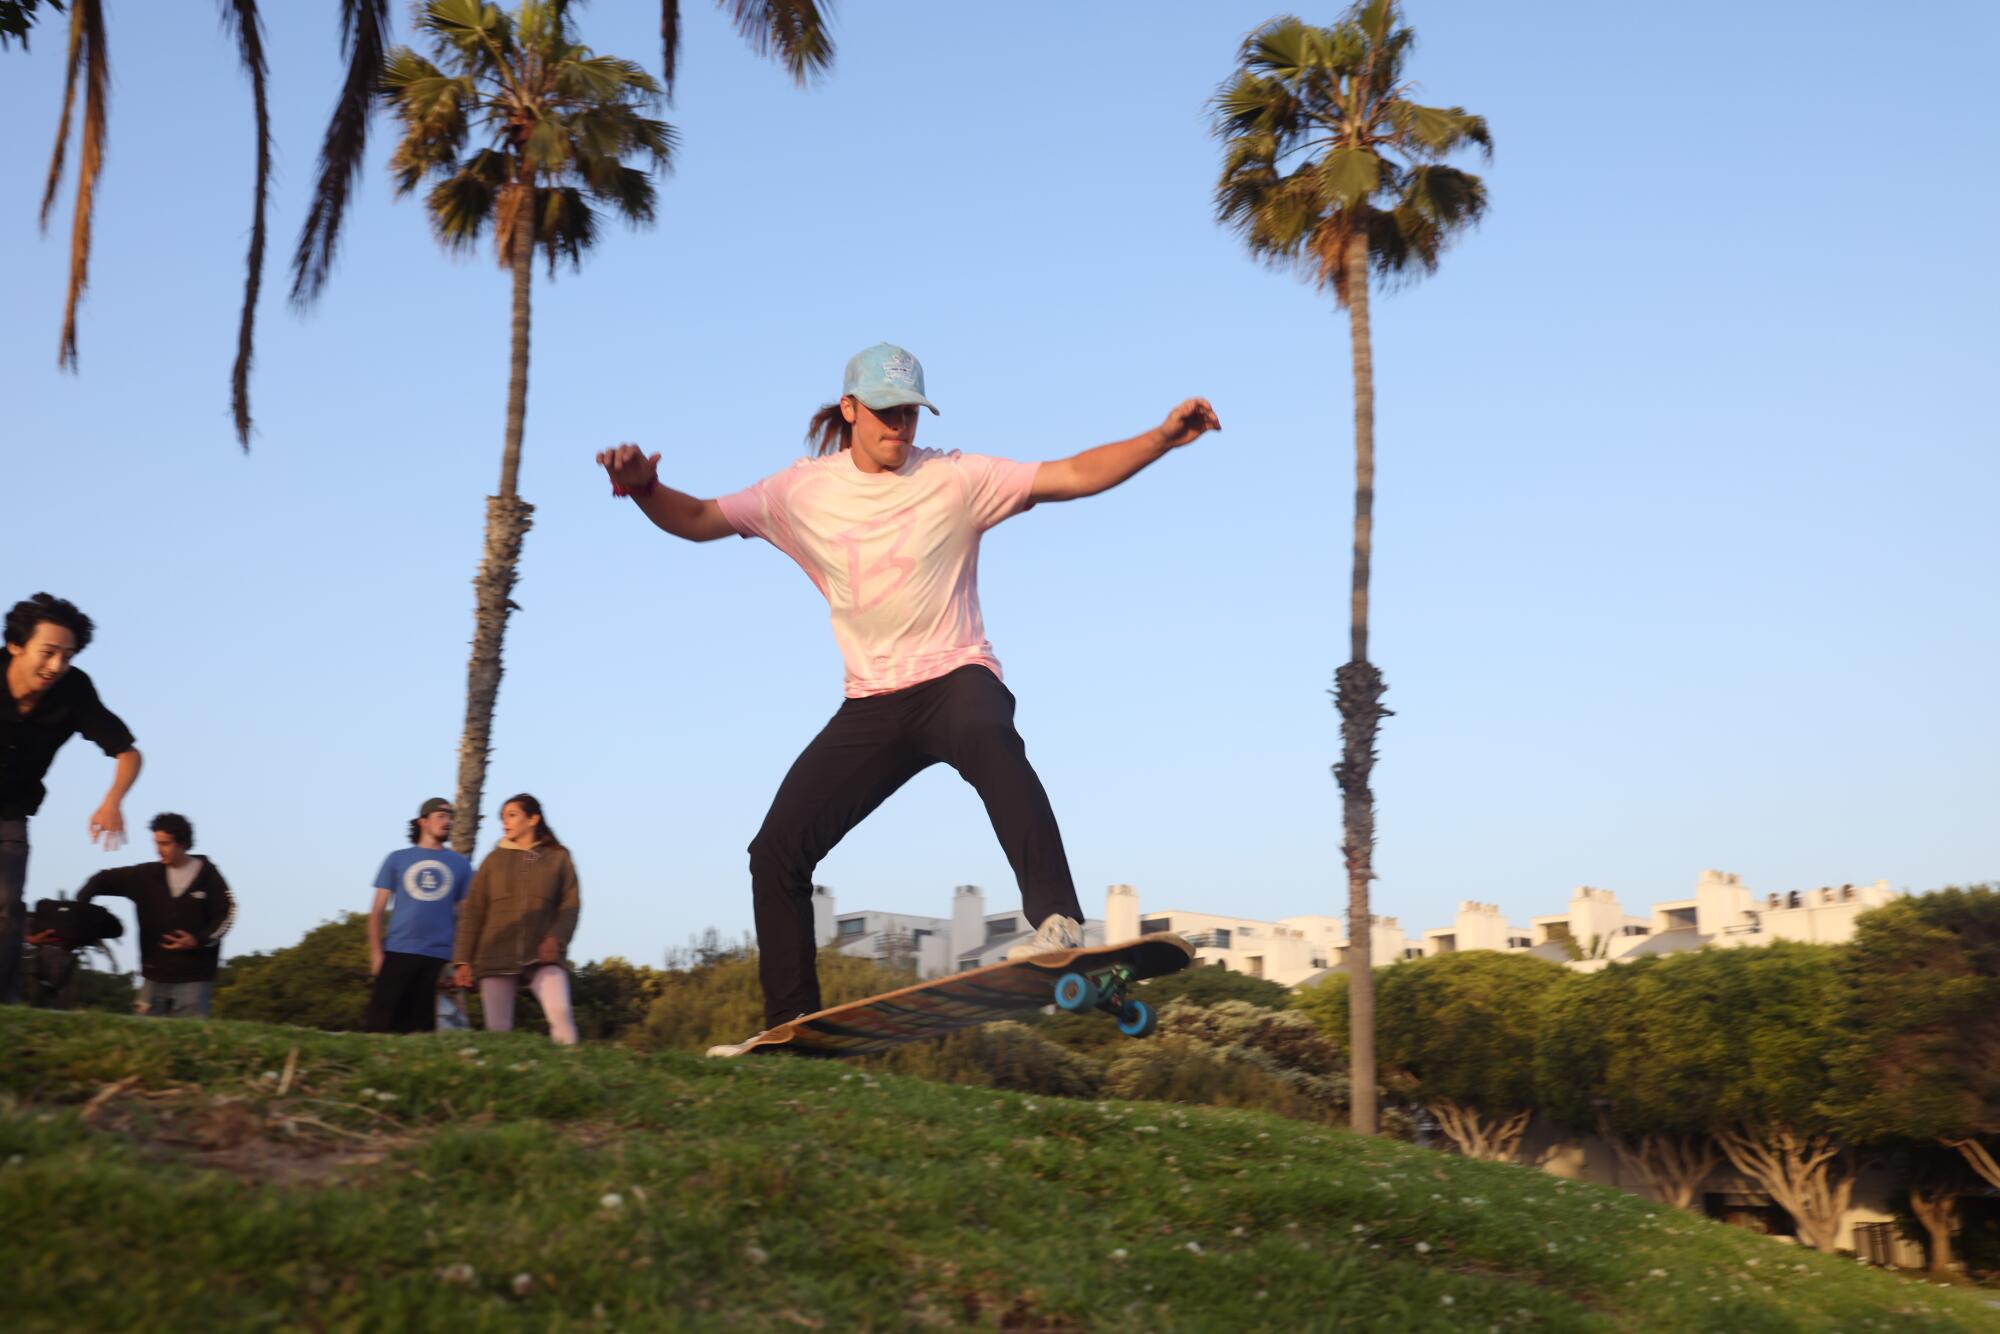 Brandon DesJarlais rides a skateboard down a grassy hill at a park